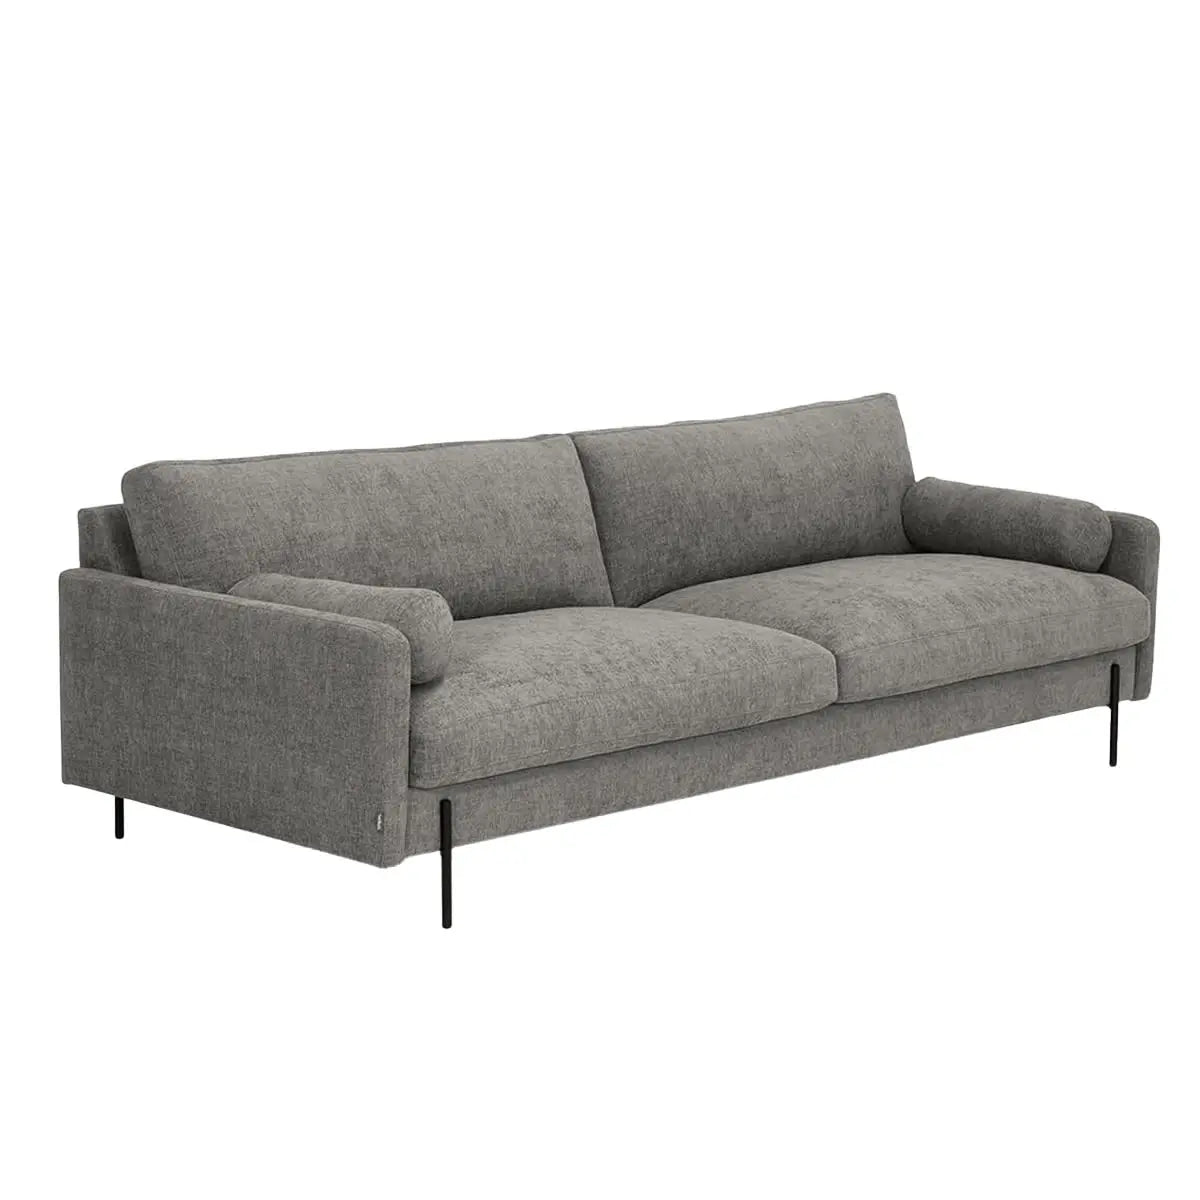 Firenze 3h-sohva 227 cm, Next-kangas dutti